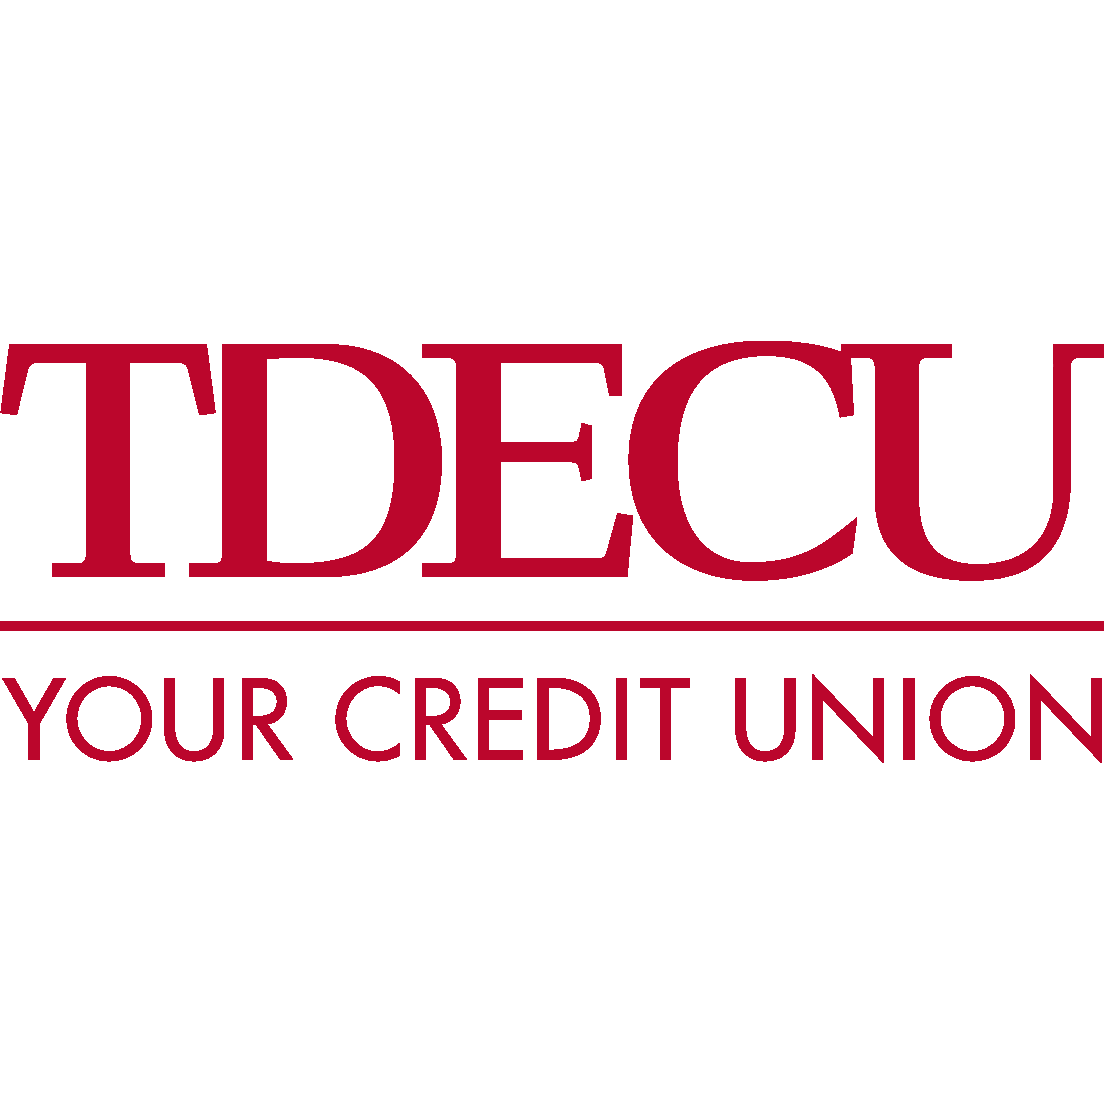 TDECU Logo